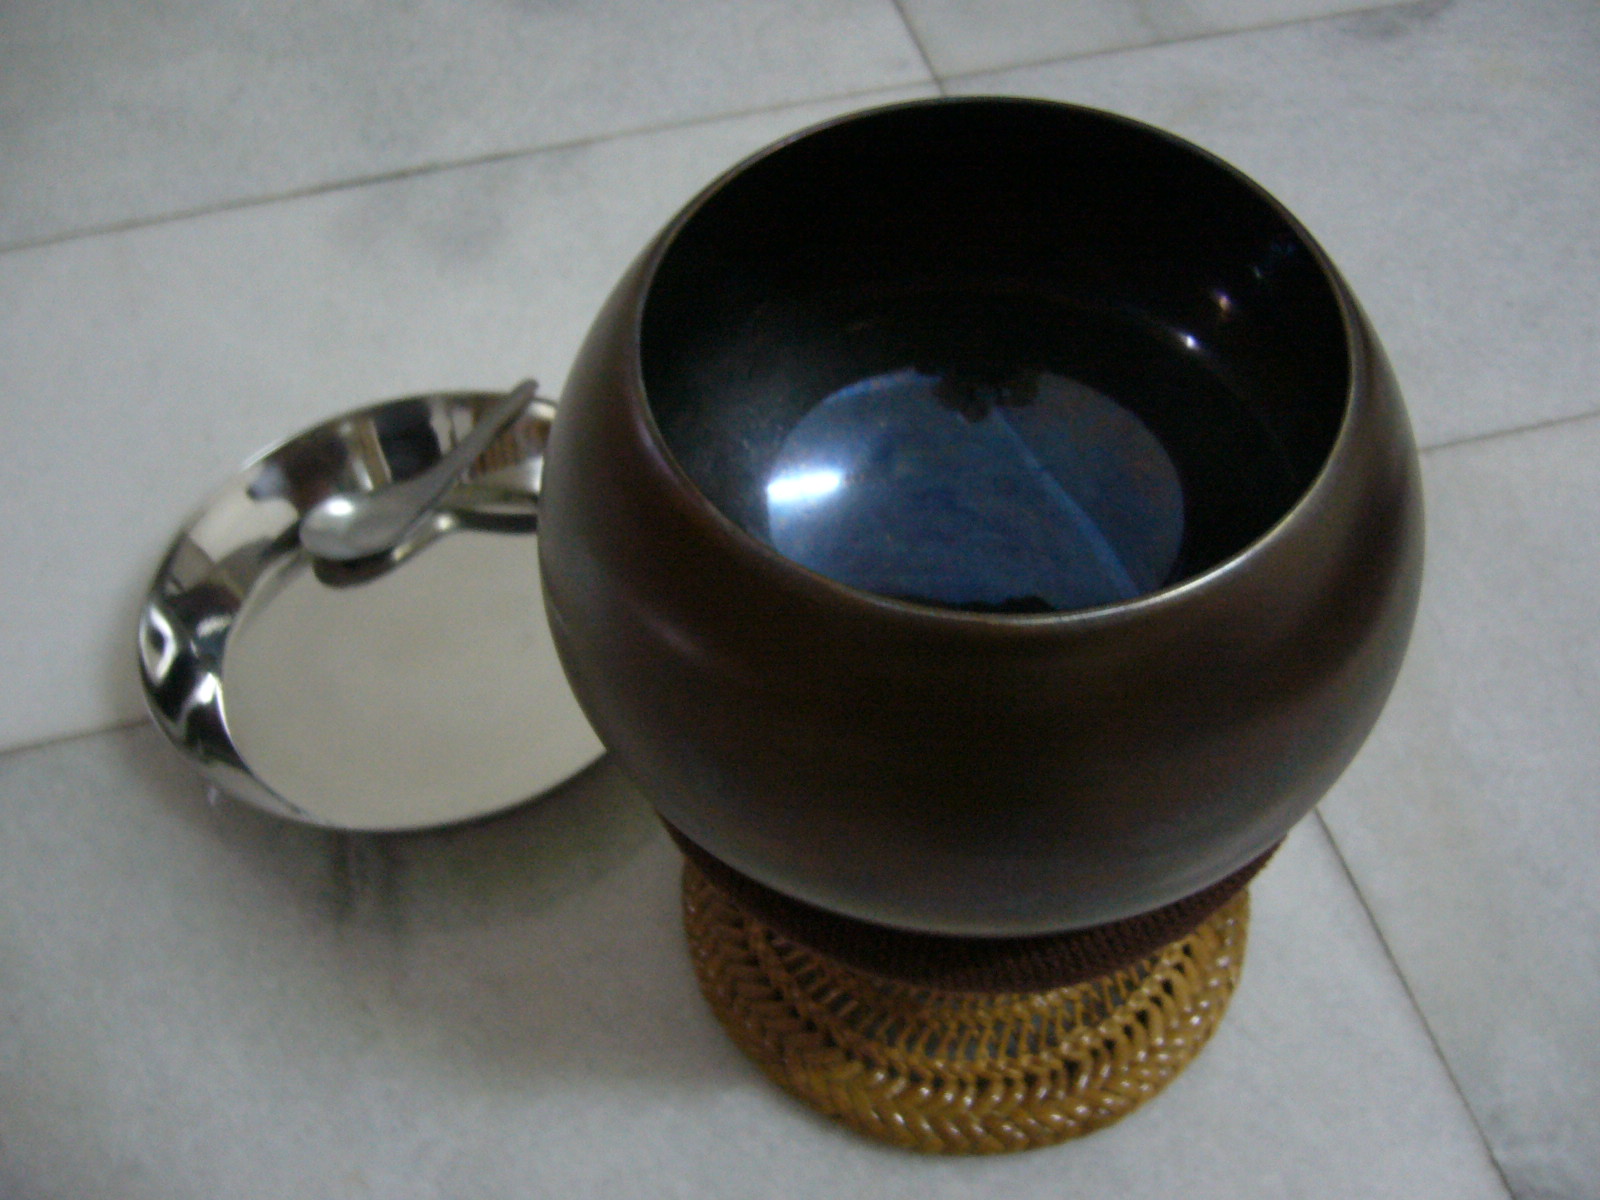 My alms bowl, a heavenly blue